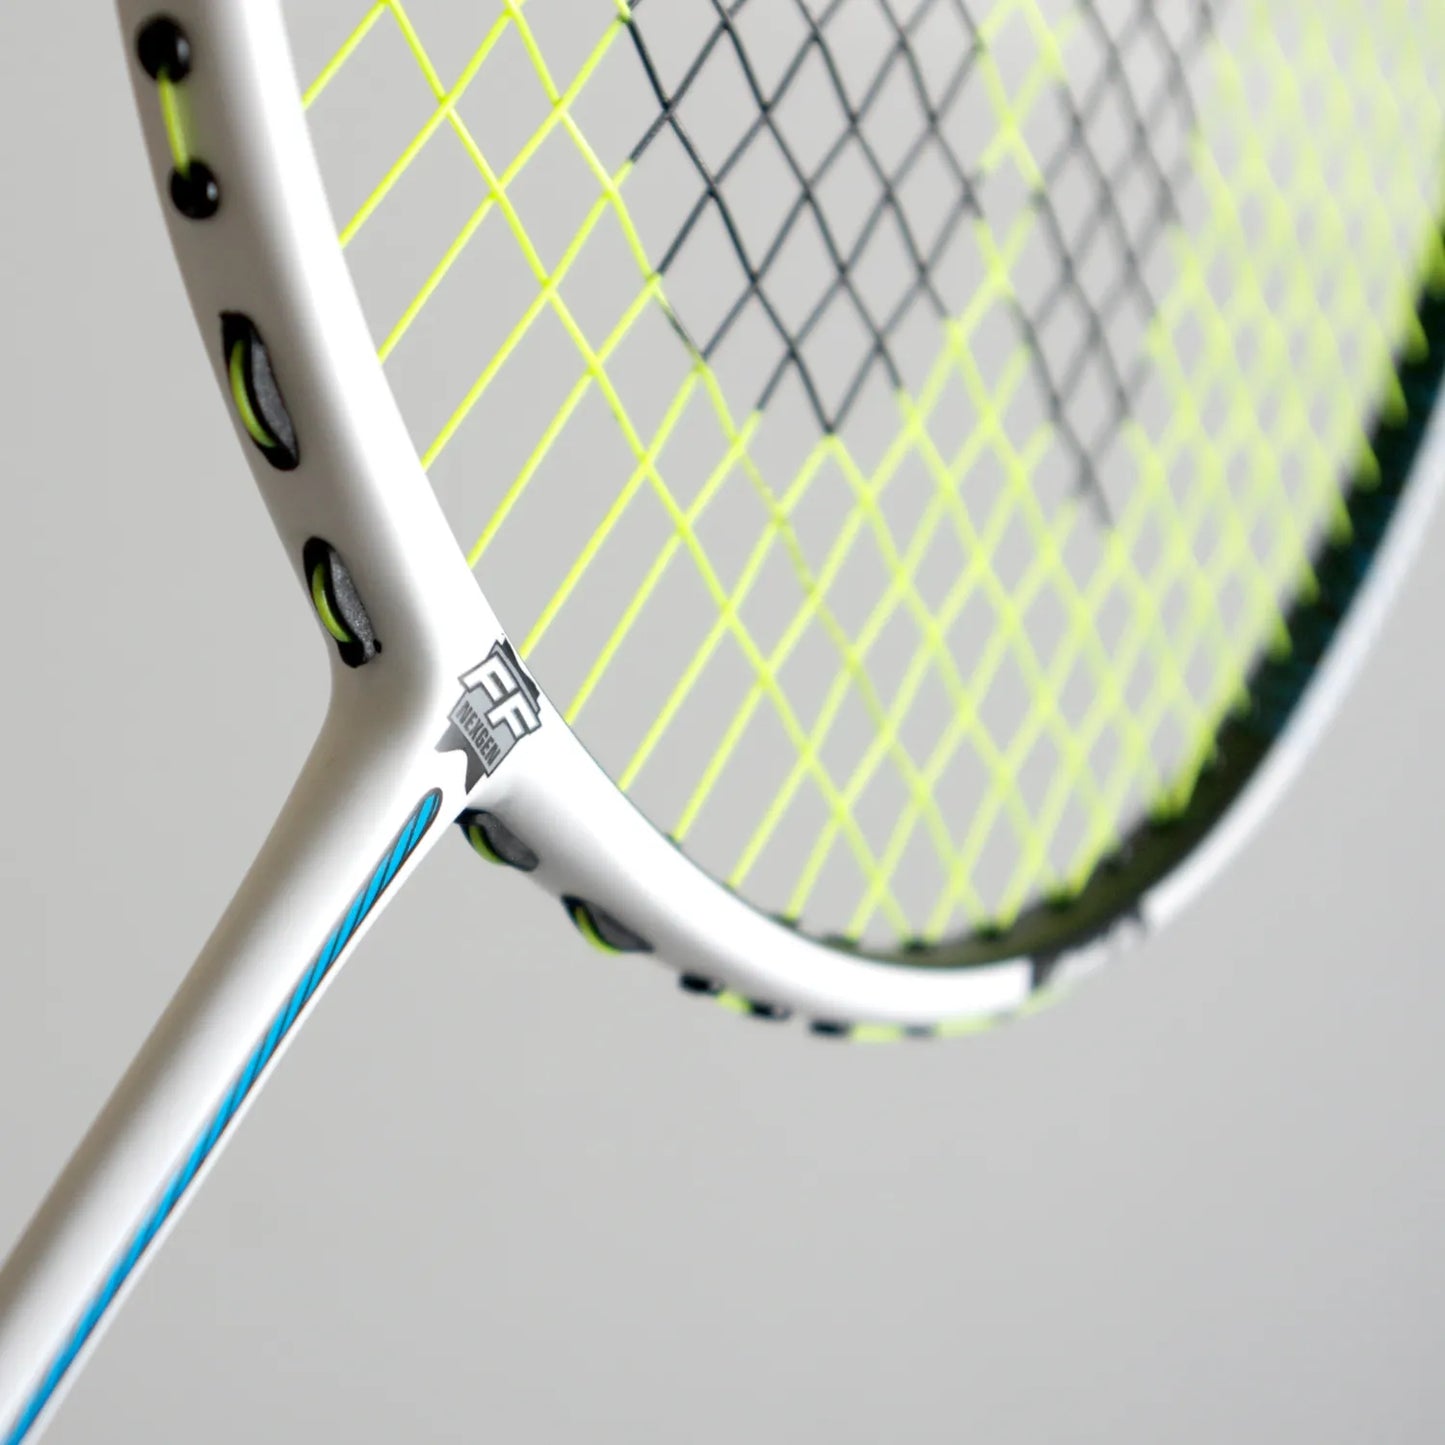 Karakal BZ Lite Badminton Racket